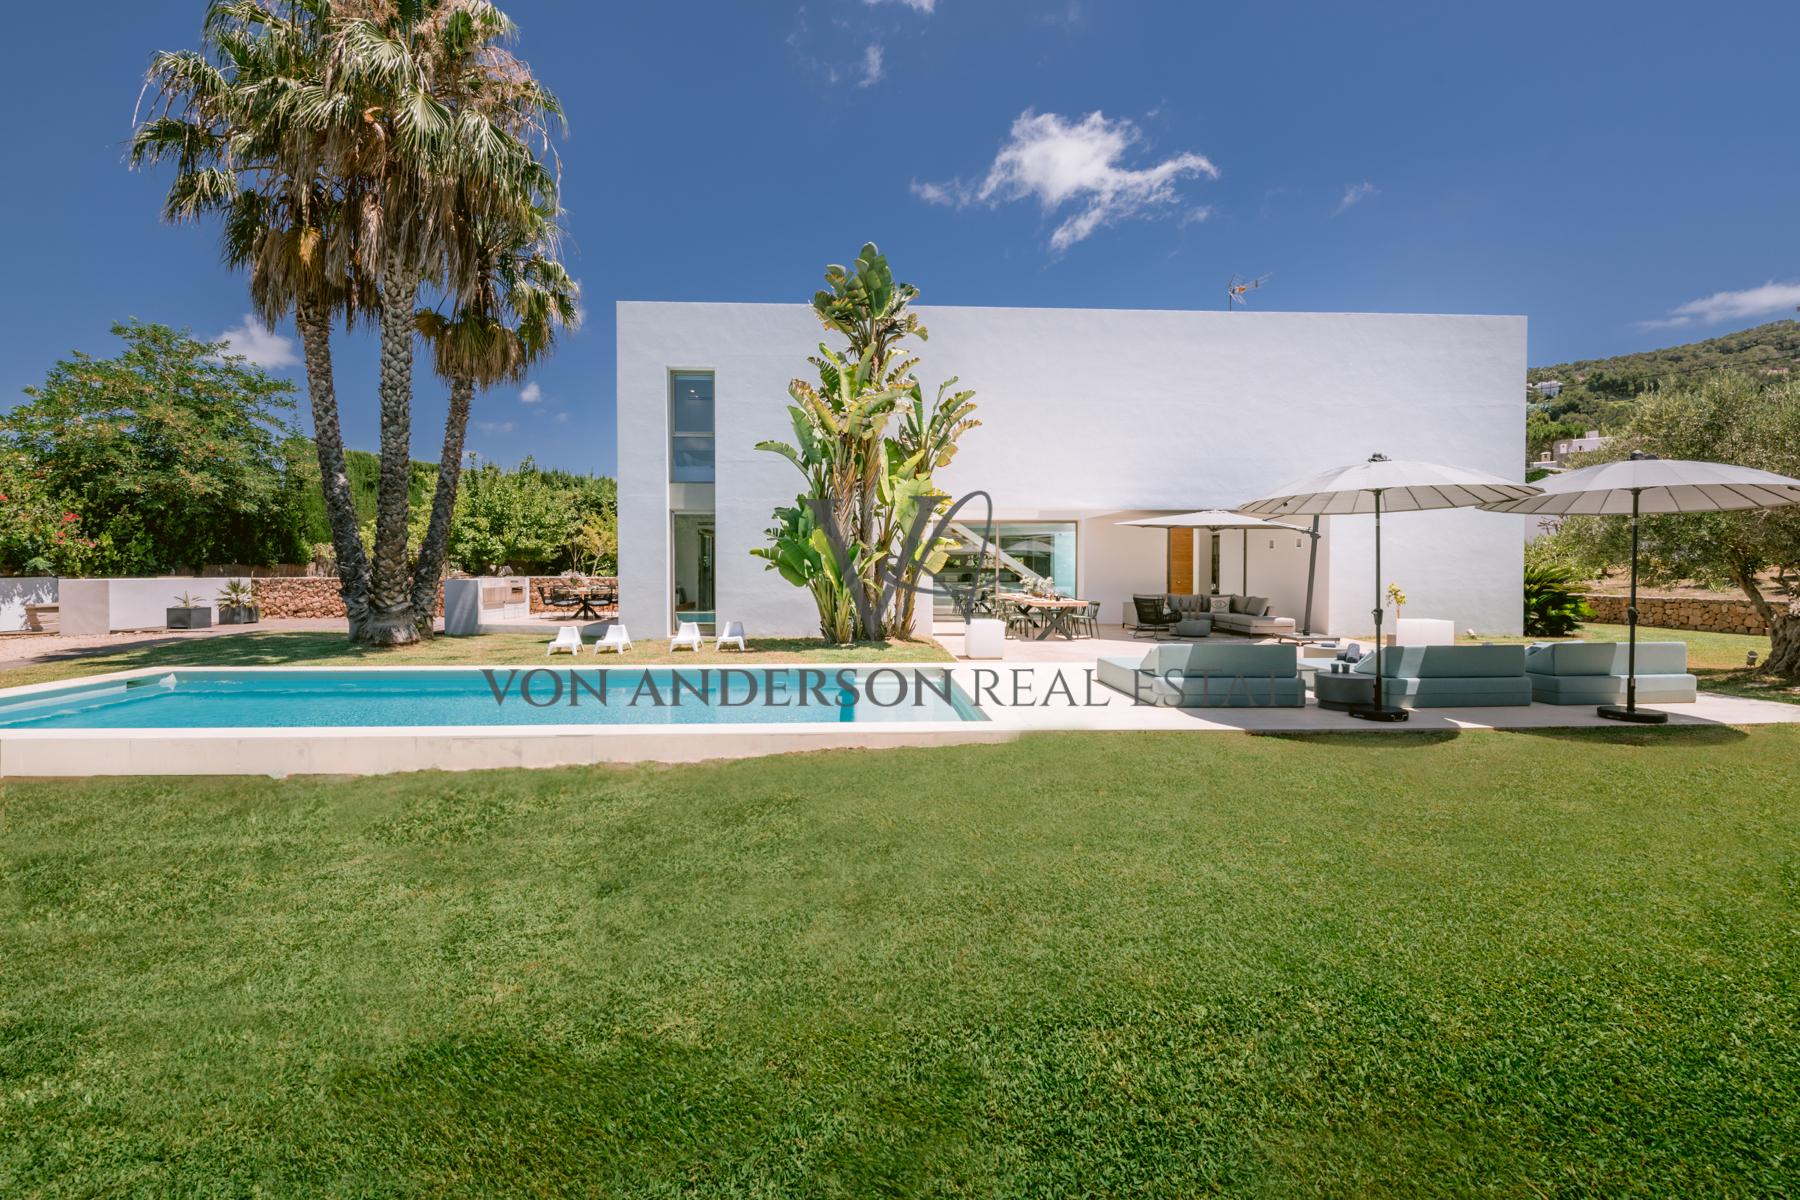 Luxurious Detached Villa with Cosmopolitan Charm near Jesus Village, ref. VA1044, for sale in Ibiza by Von Anderson Real Estate